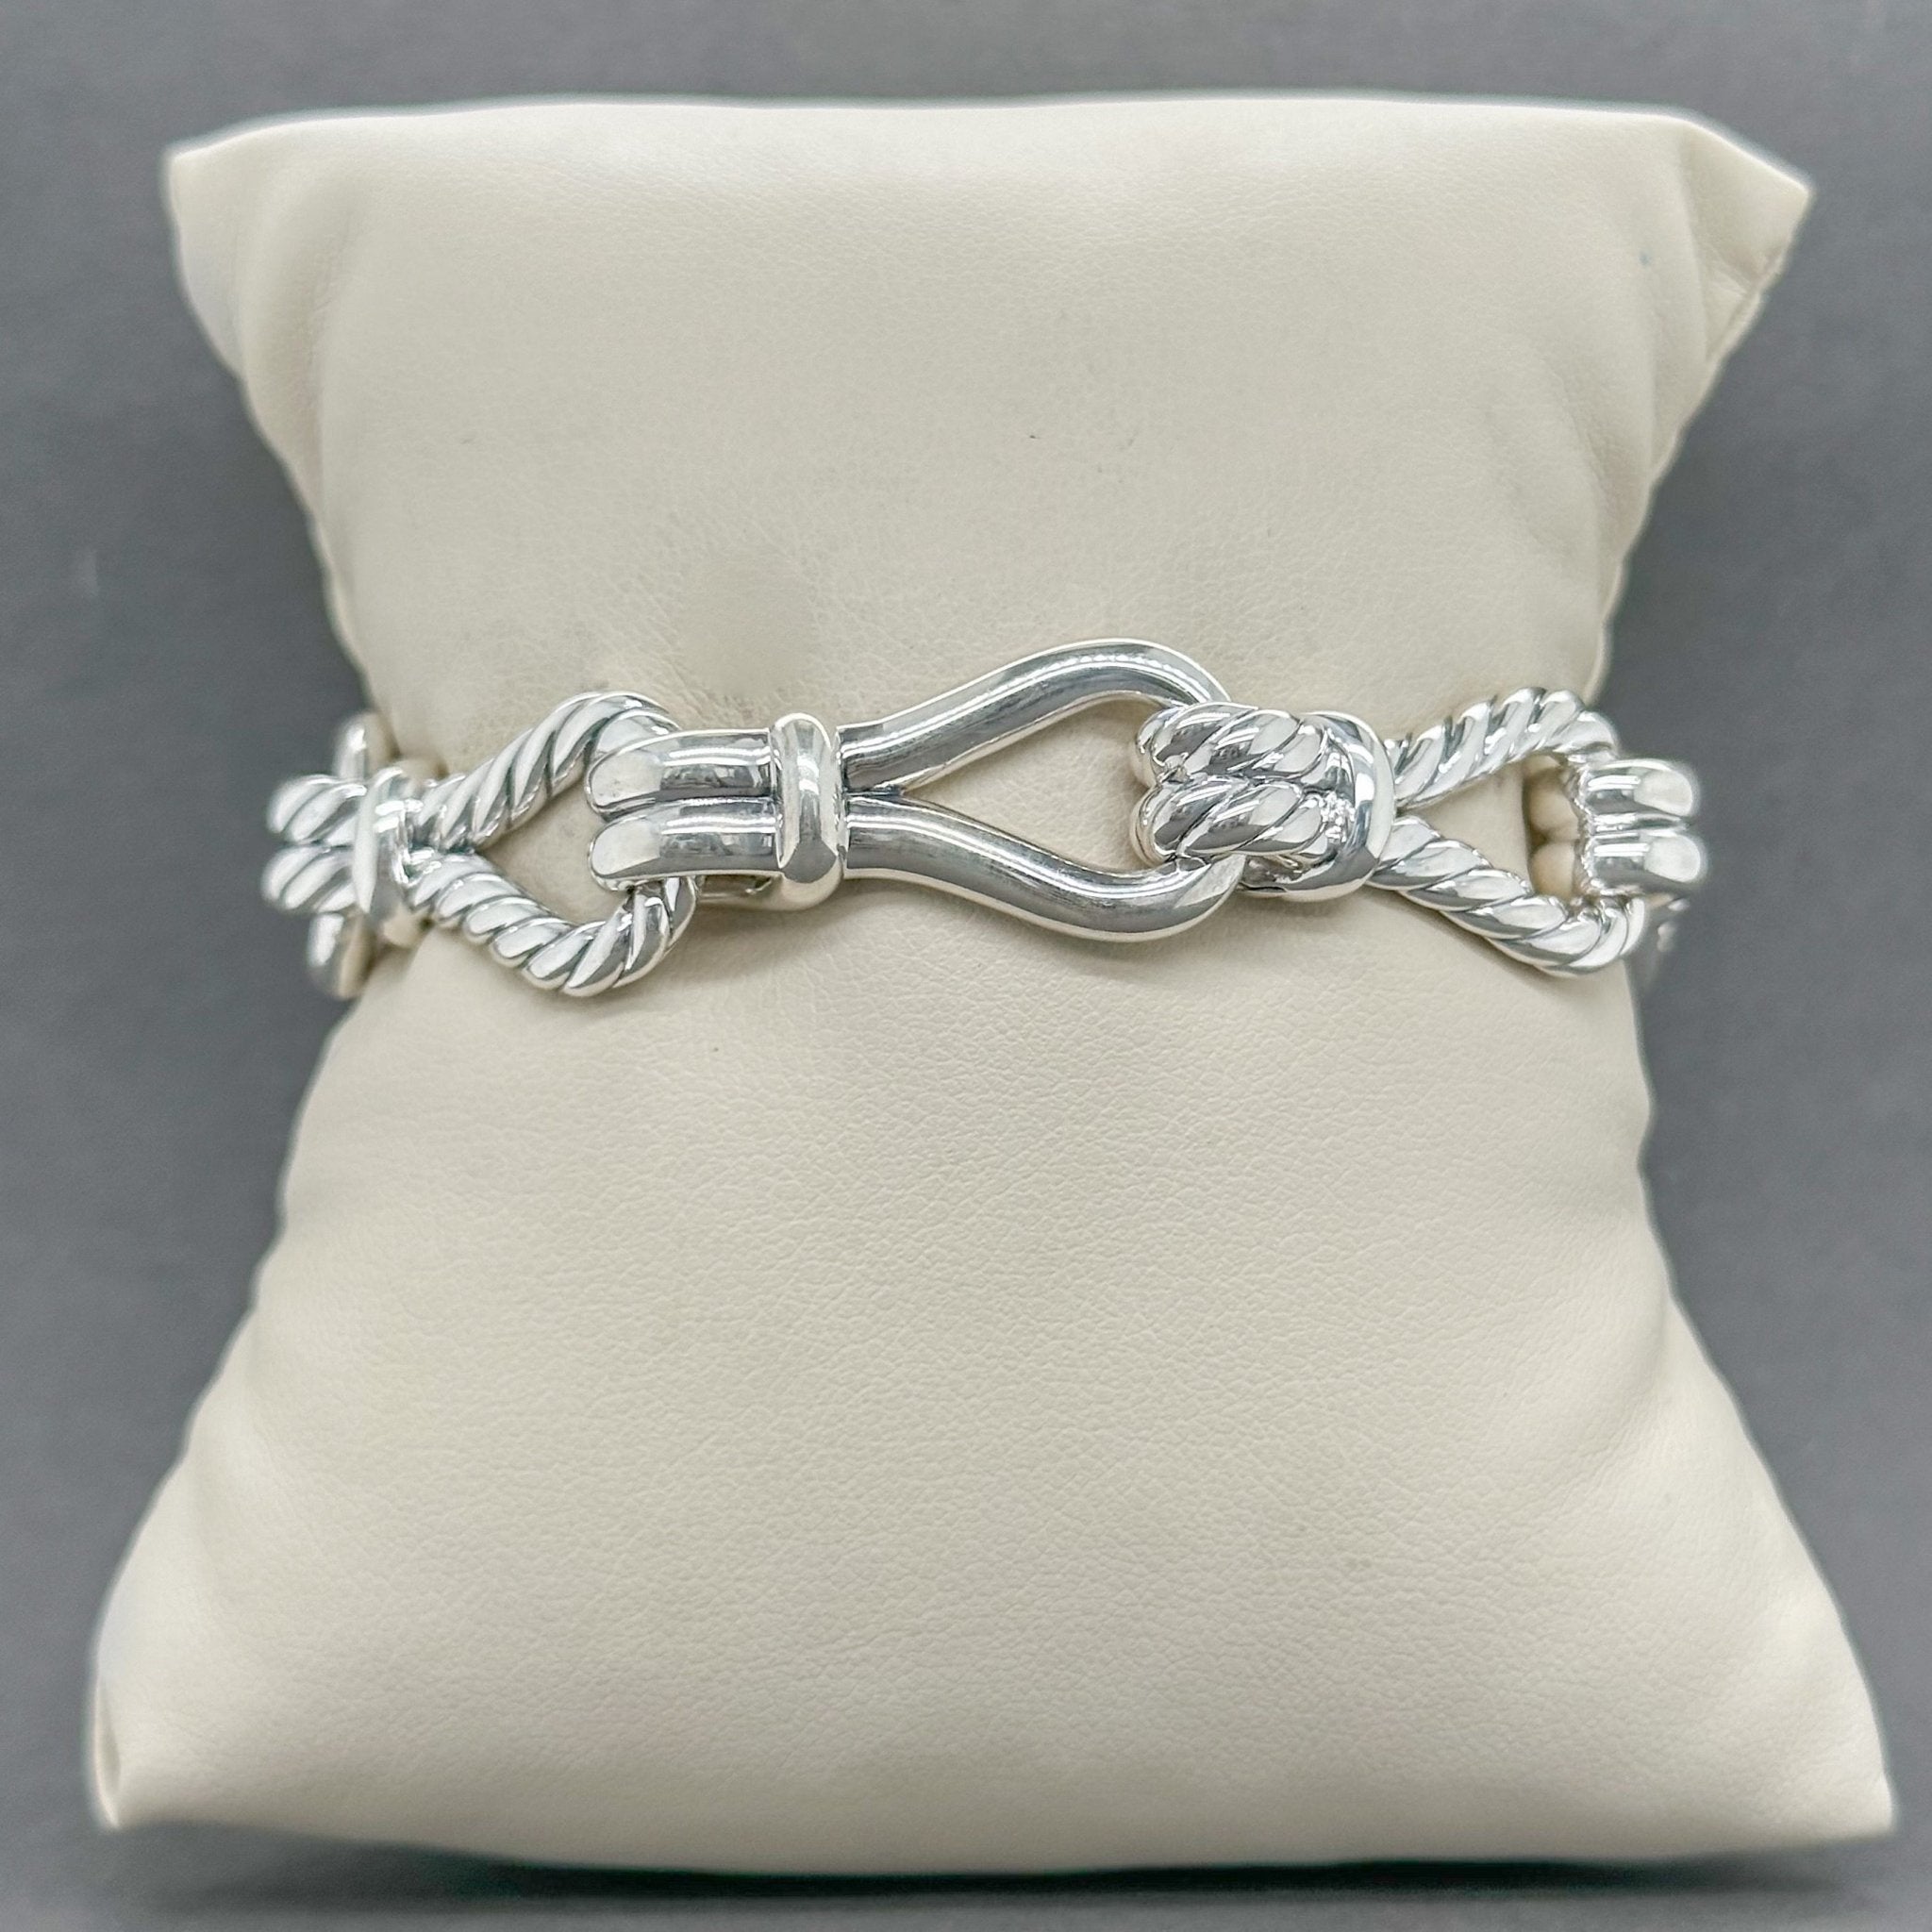 Thoroughbred Loop Chain Bracelet in Sterling Silver, 14mm